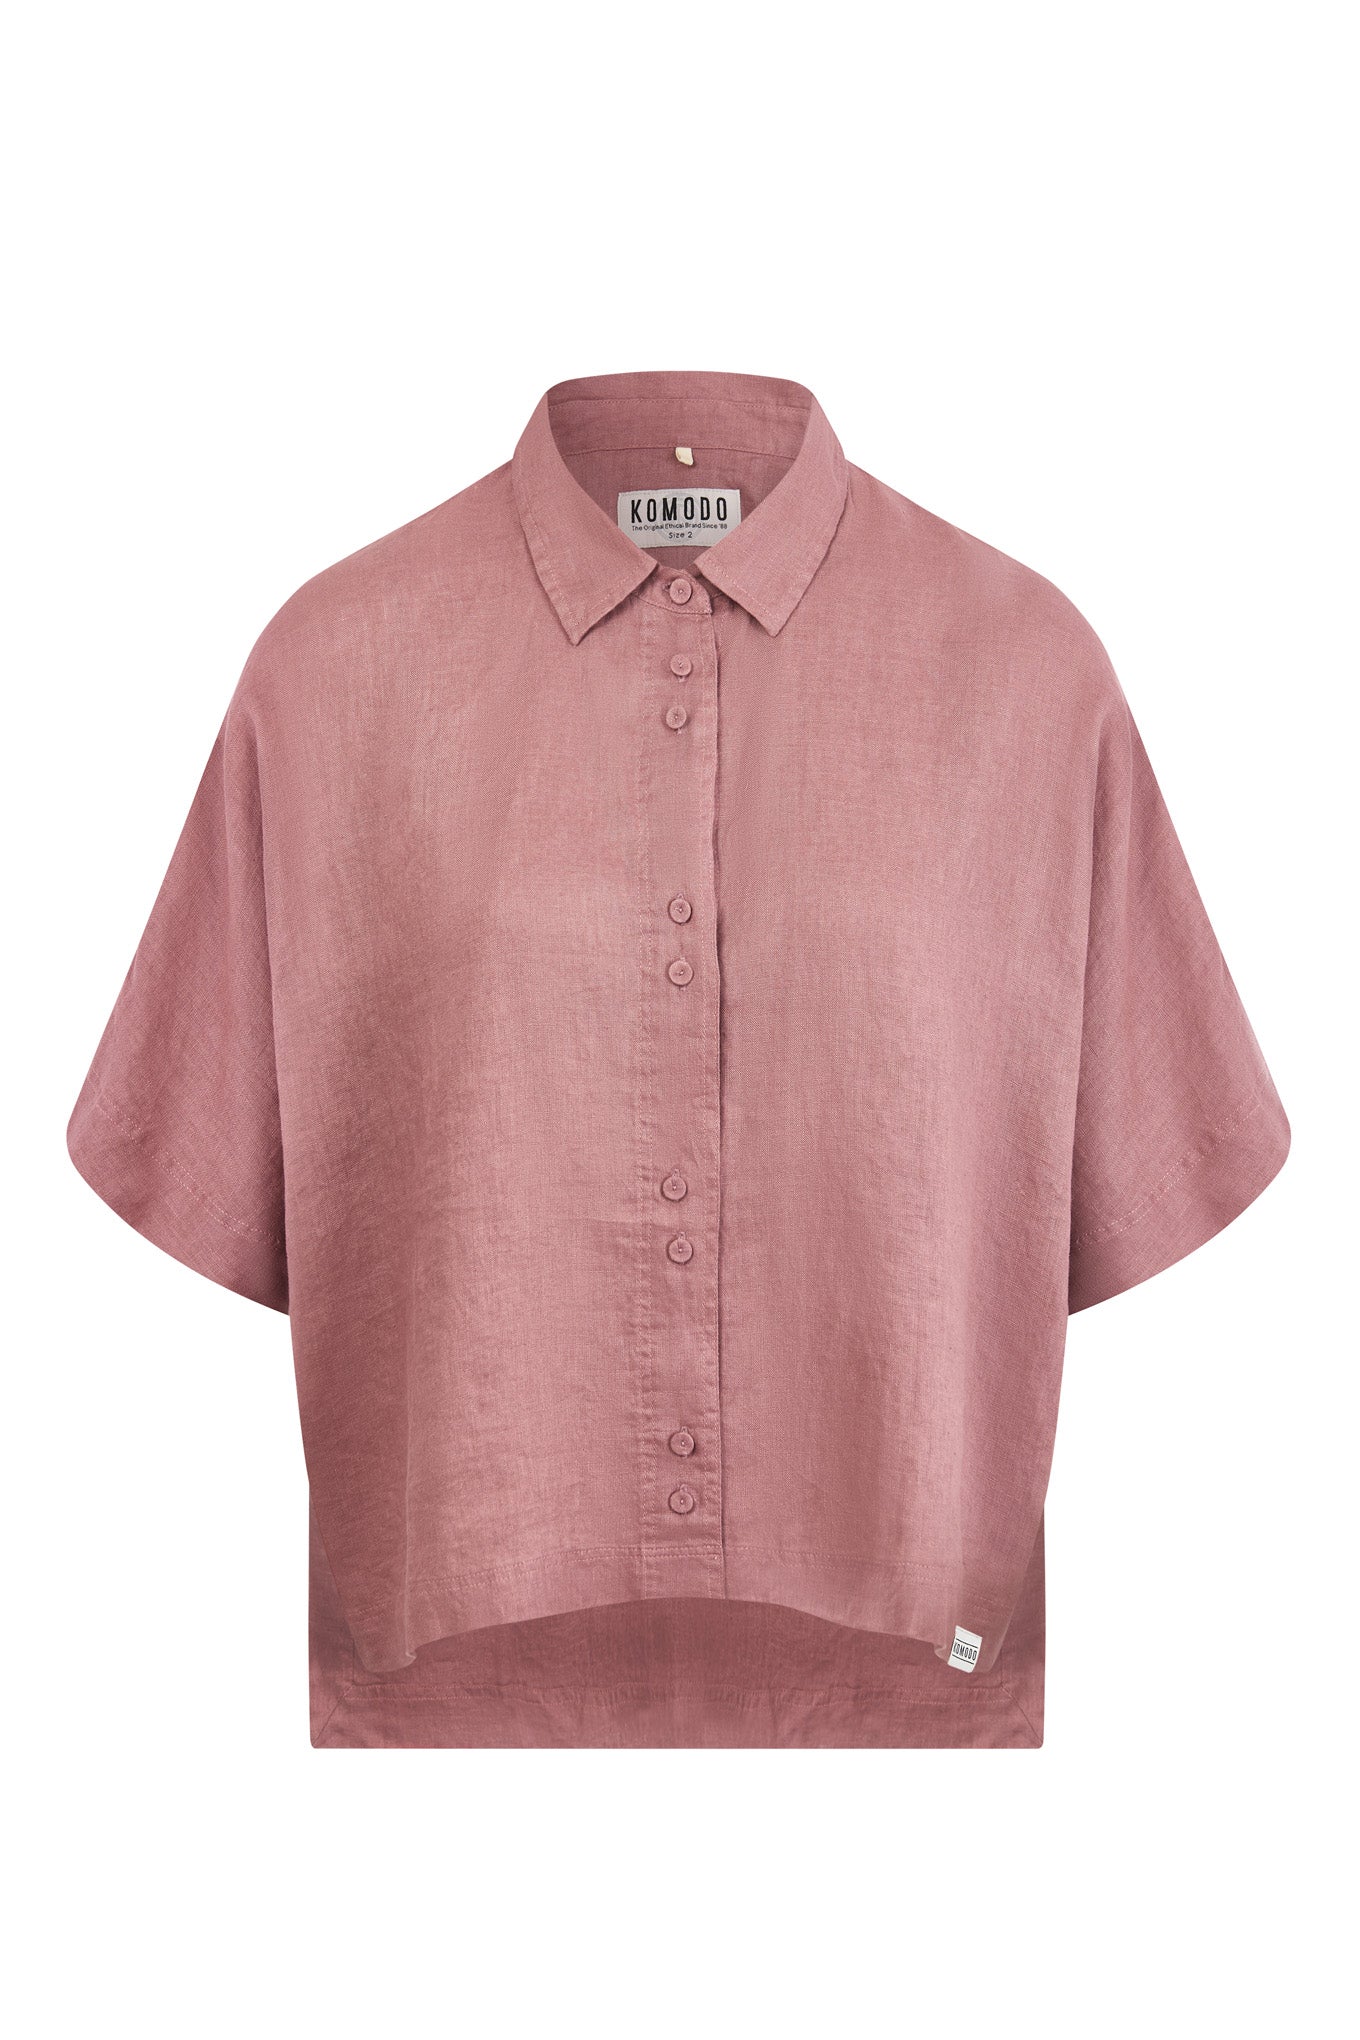 Pink shirt KIMONO made of organic linen from Komodo